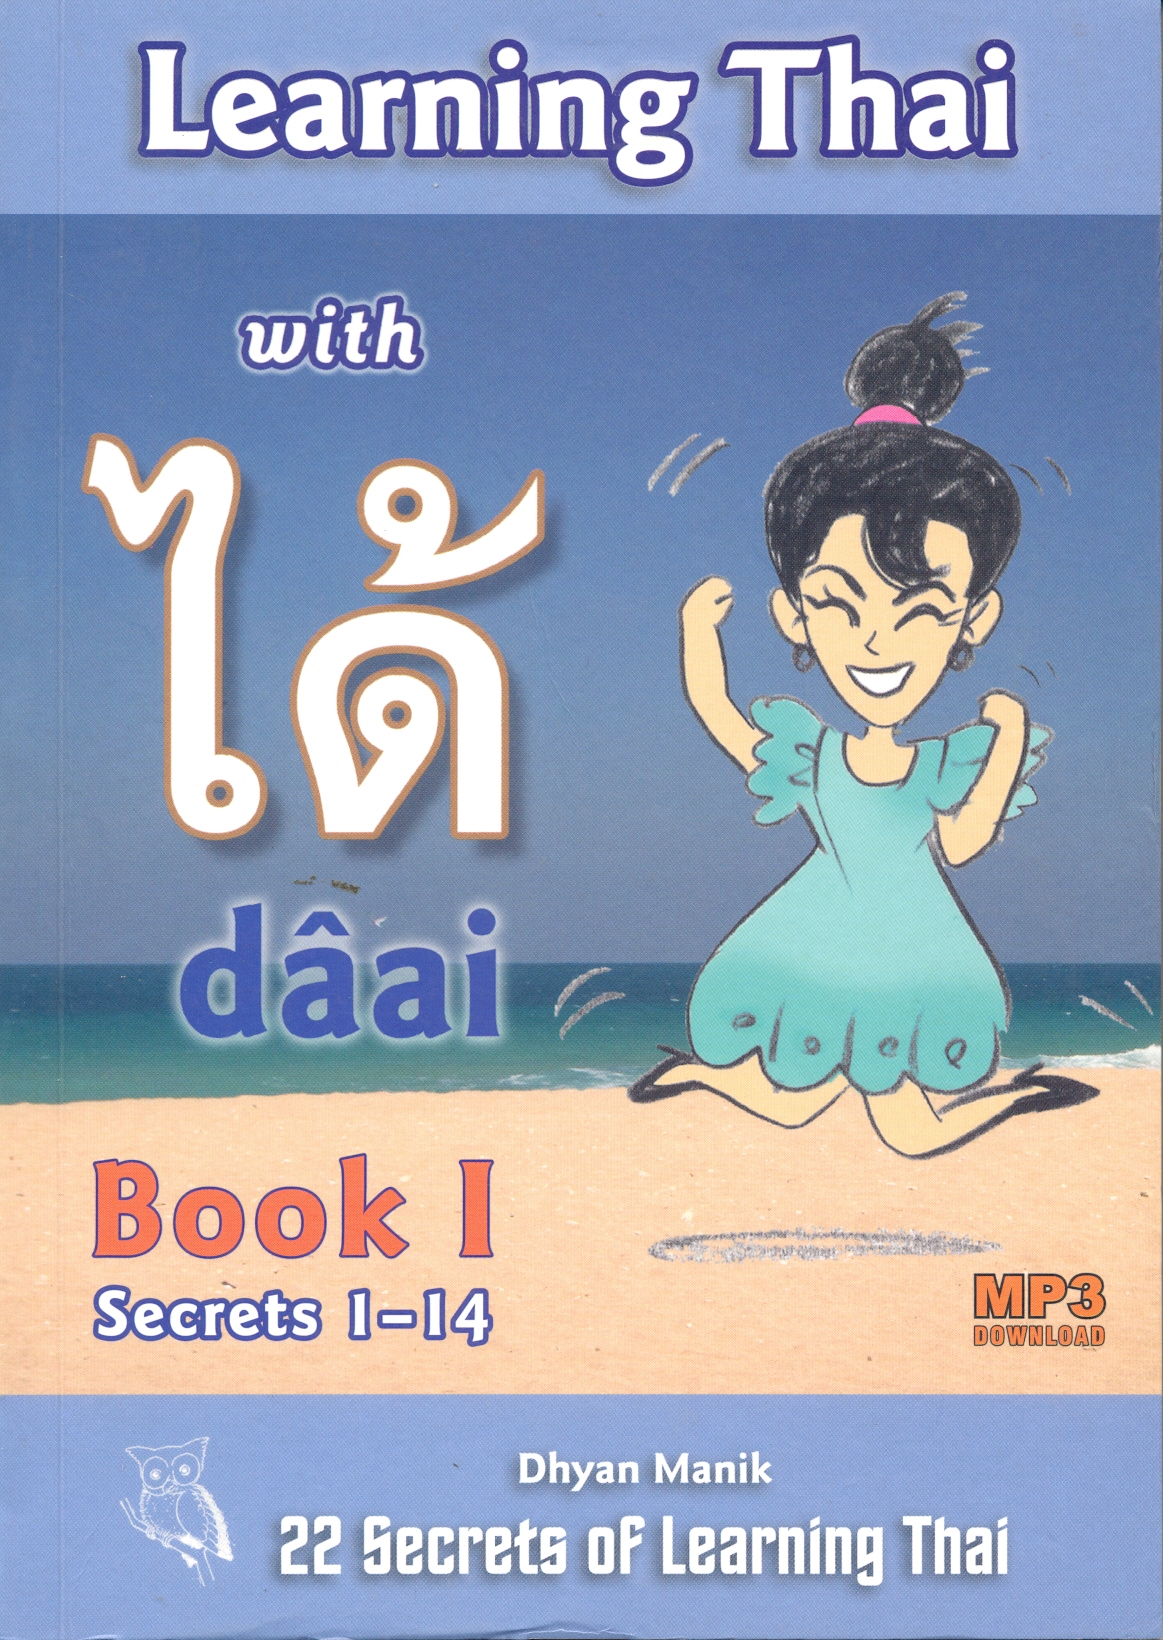 Learning Thai with daai ได้ 